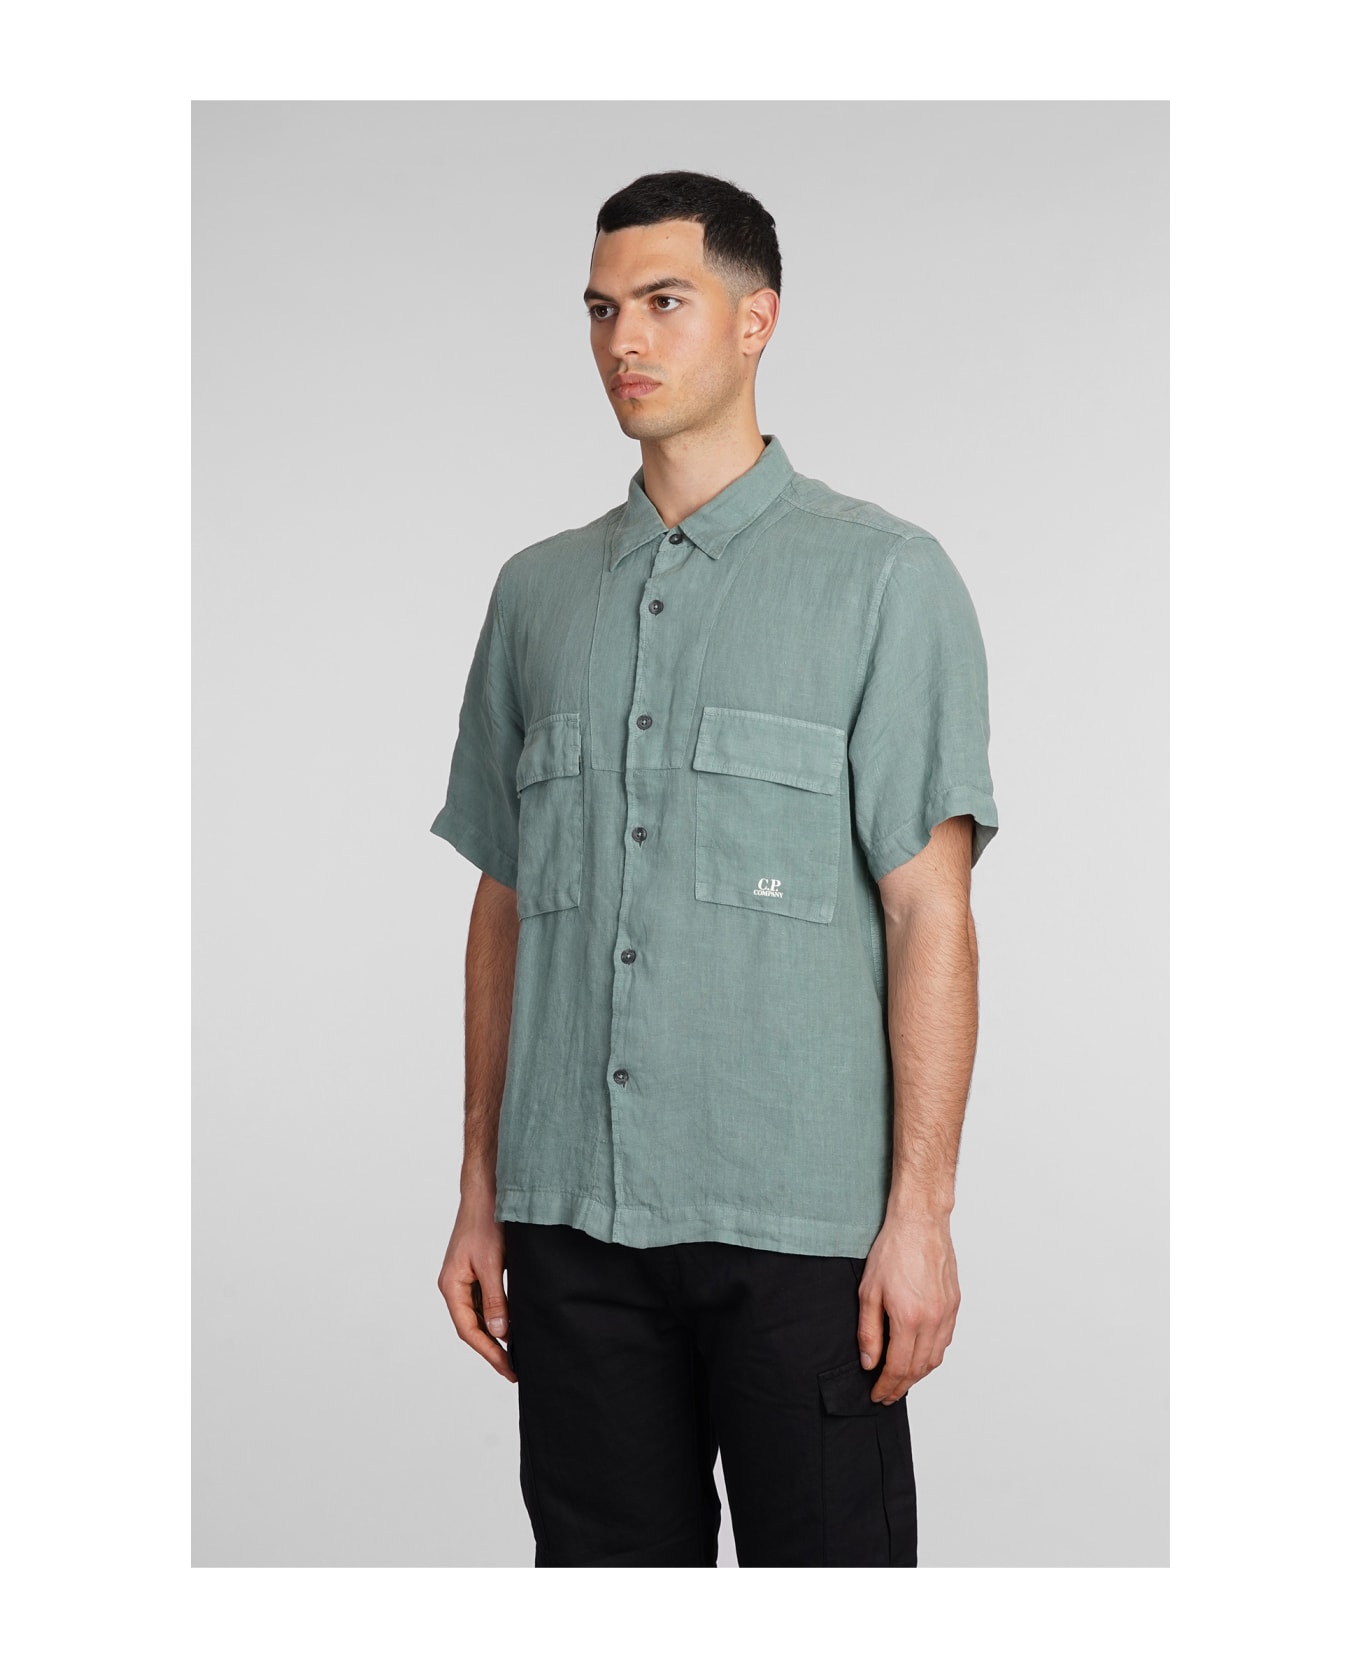 C.P. Company Shirt In Green Linen - green